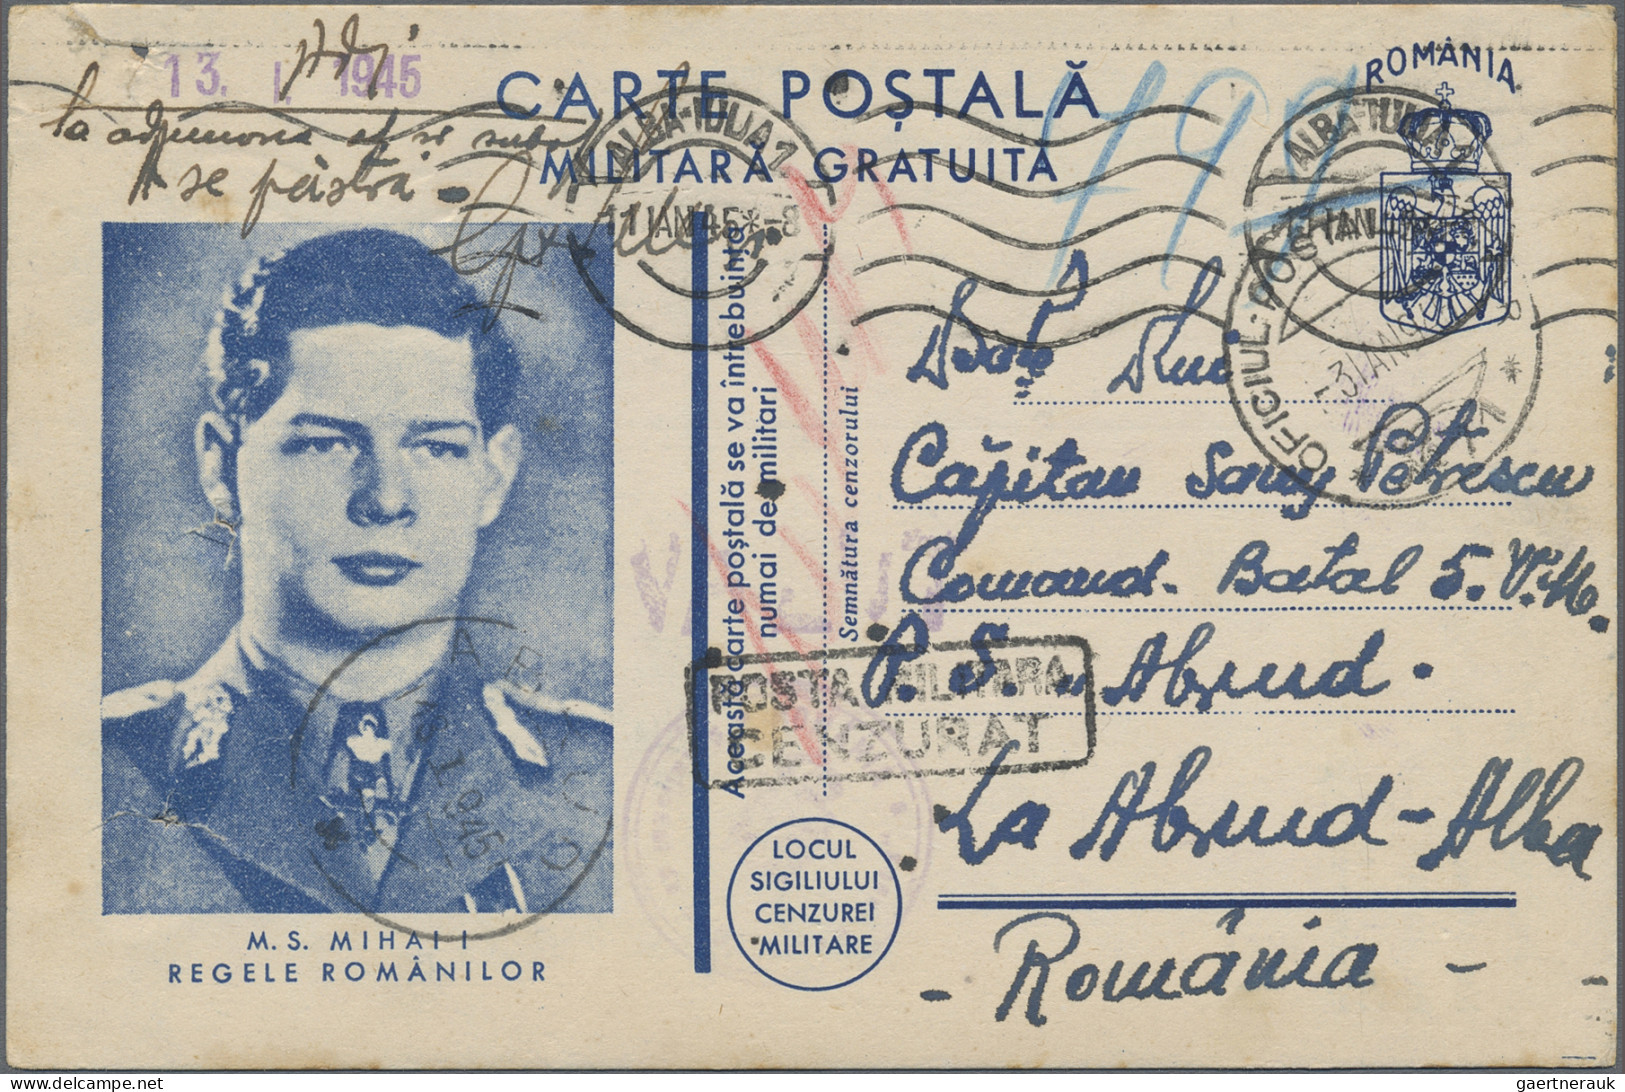 Romania - postal stationery: 1928/1944 Postal stationery picture cards: Speciali